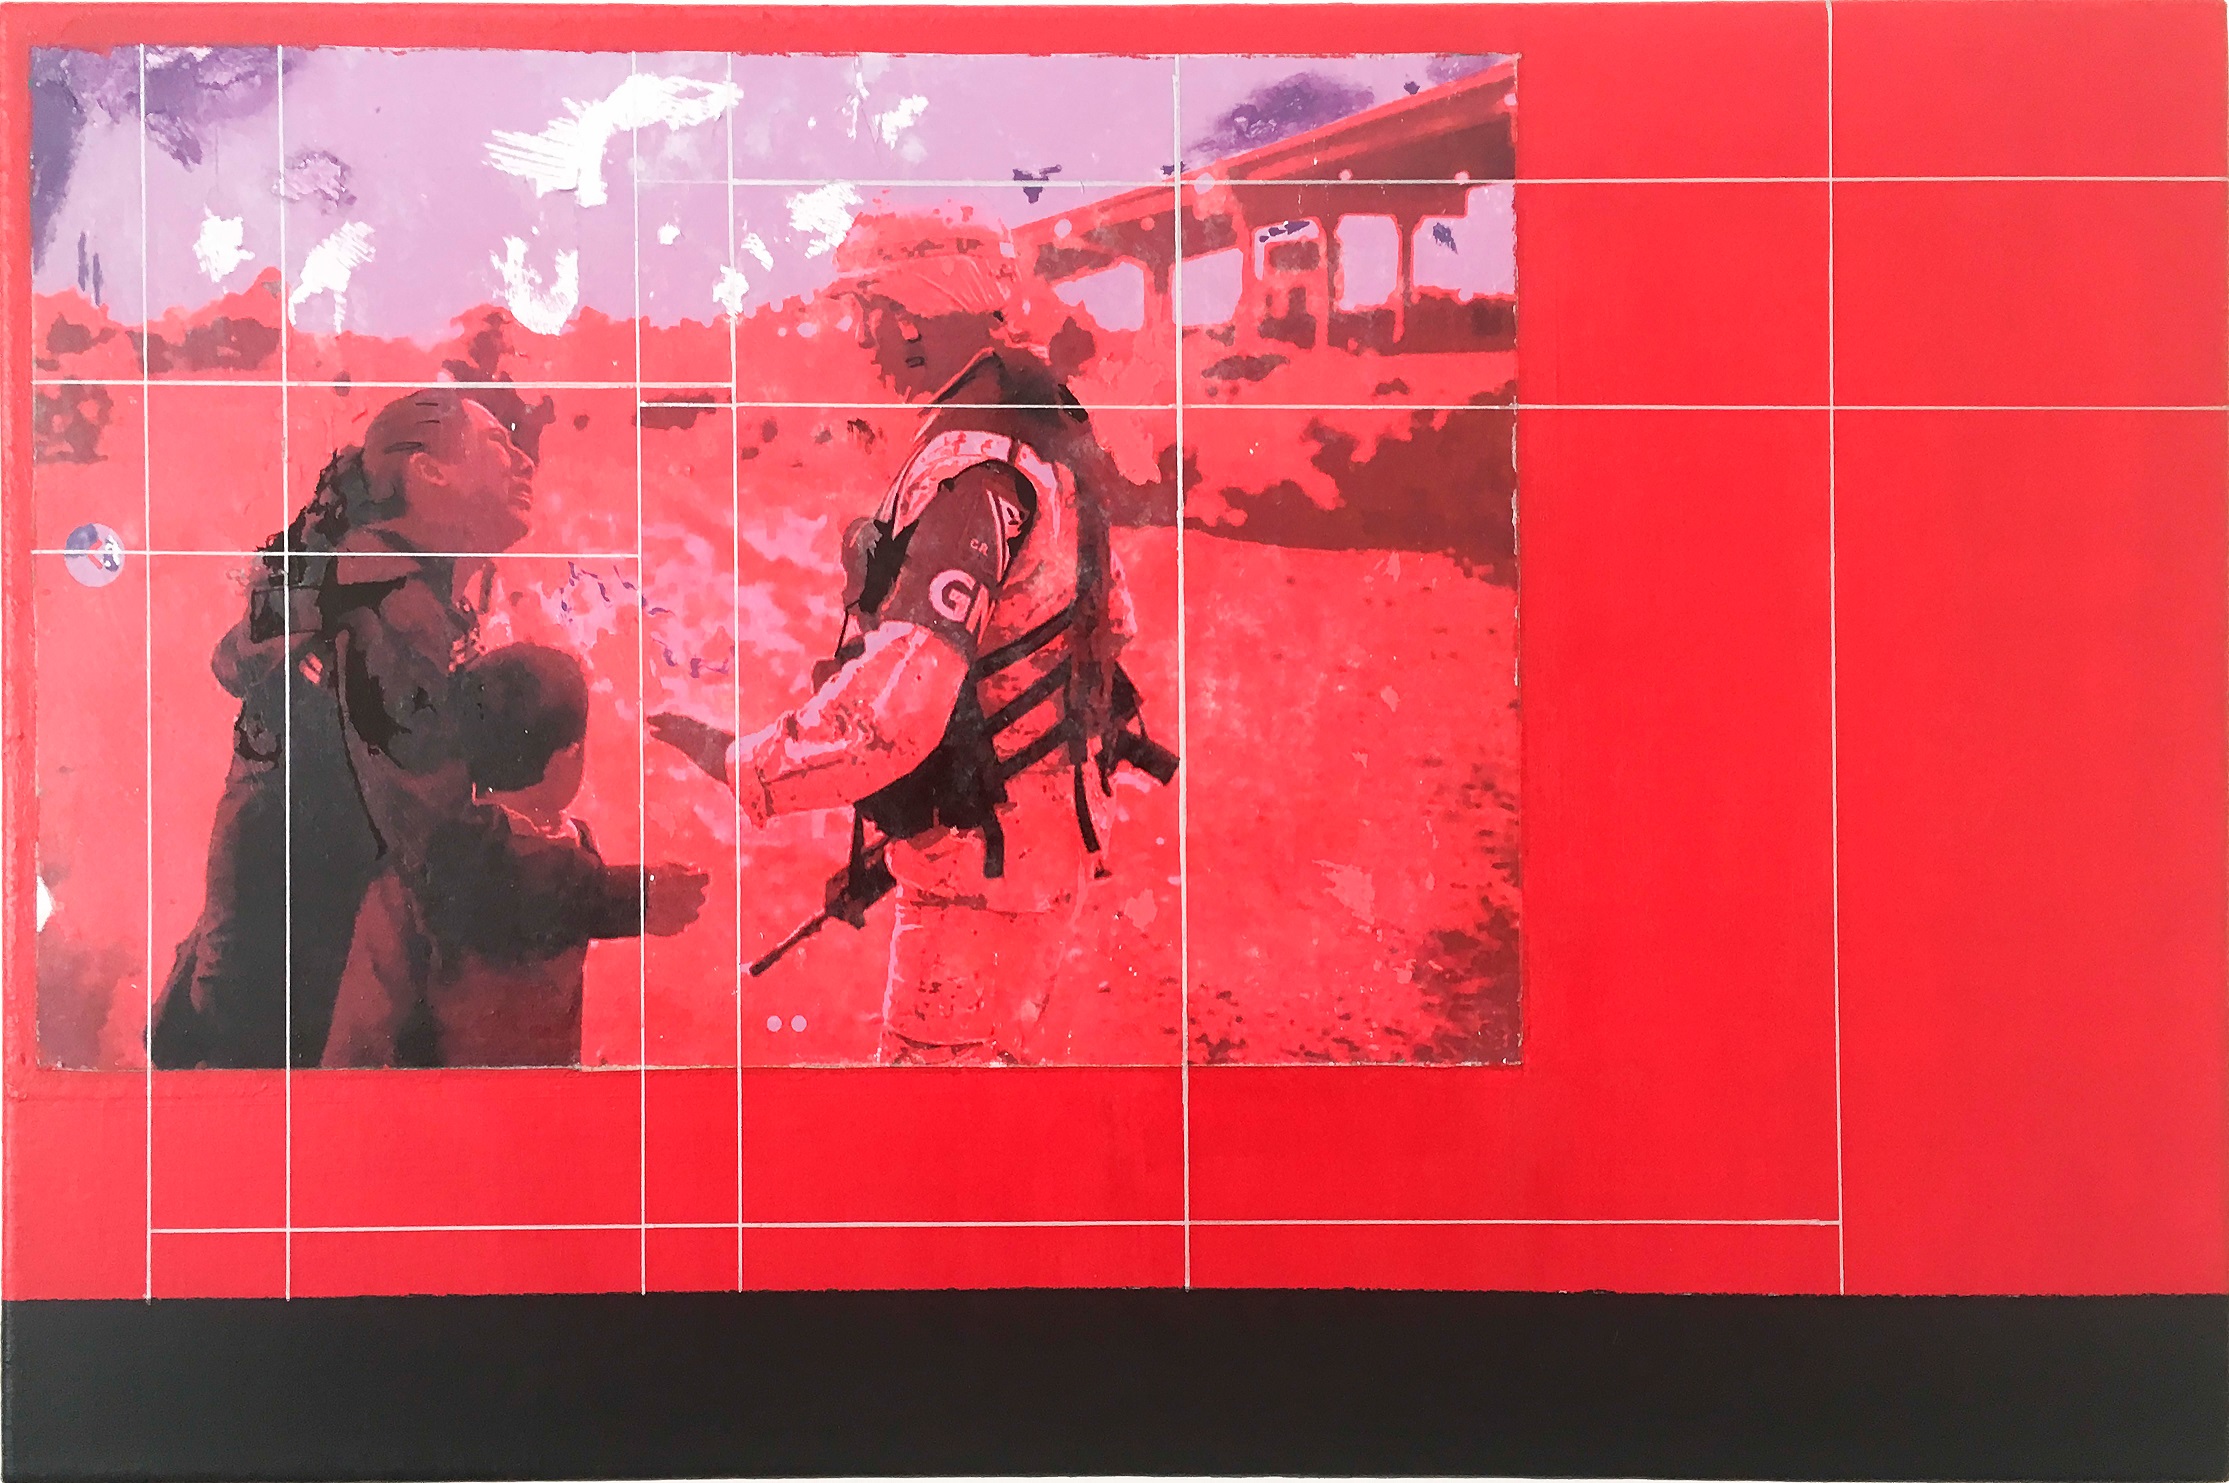 Diego Castro, Front 0119 - Série Front, Transferência fotográfica, tinta acrílica sobre tela, 40 X 60 cm, 2019